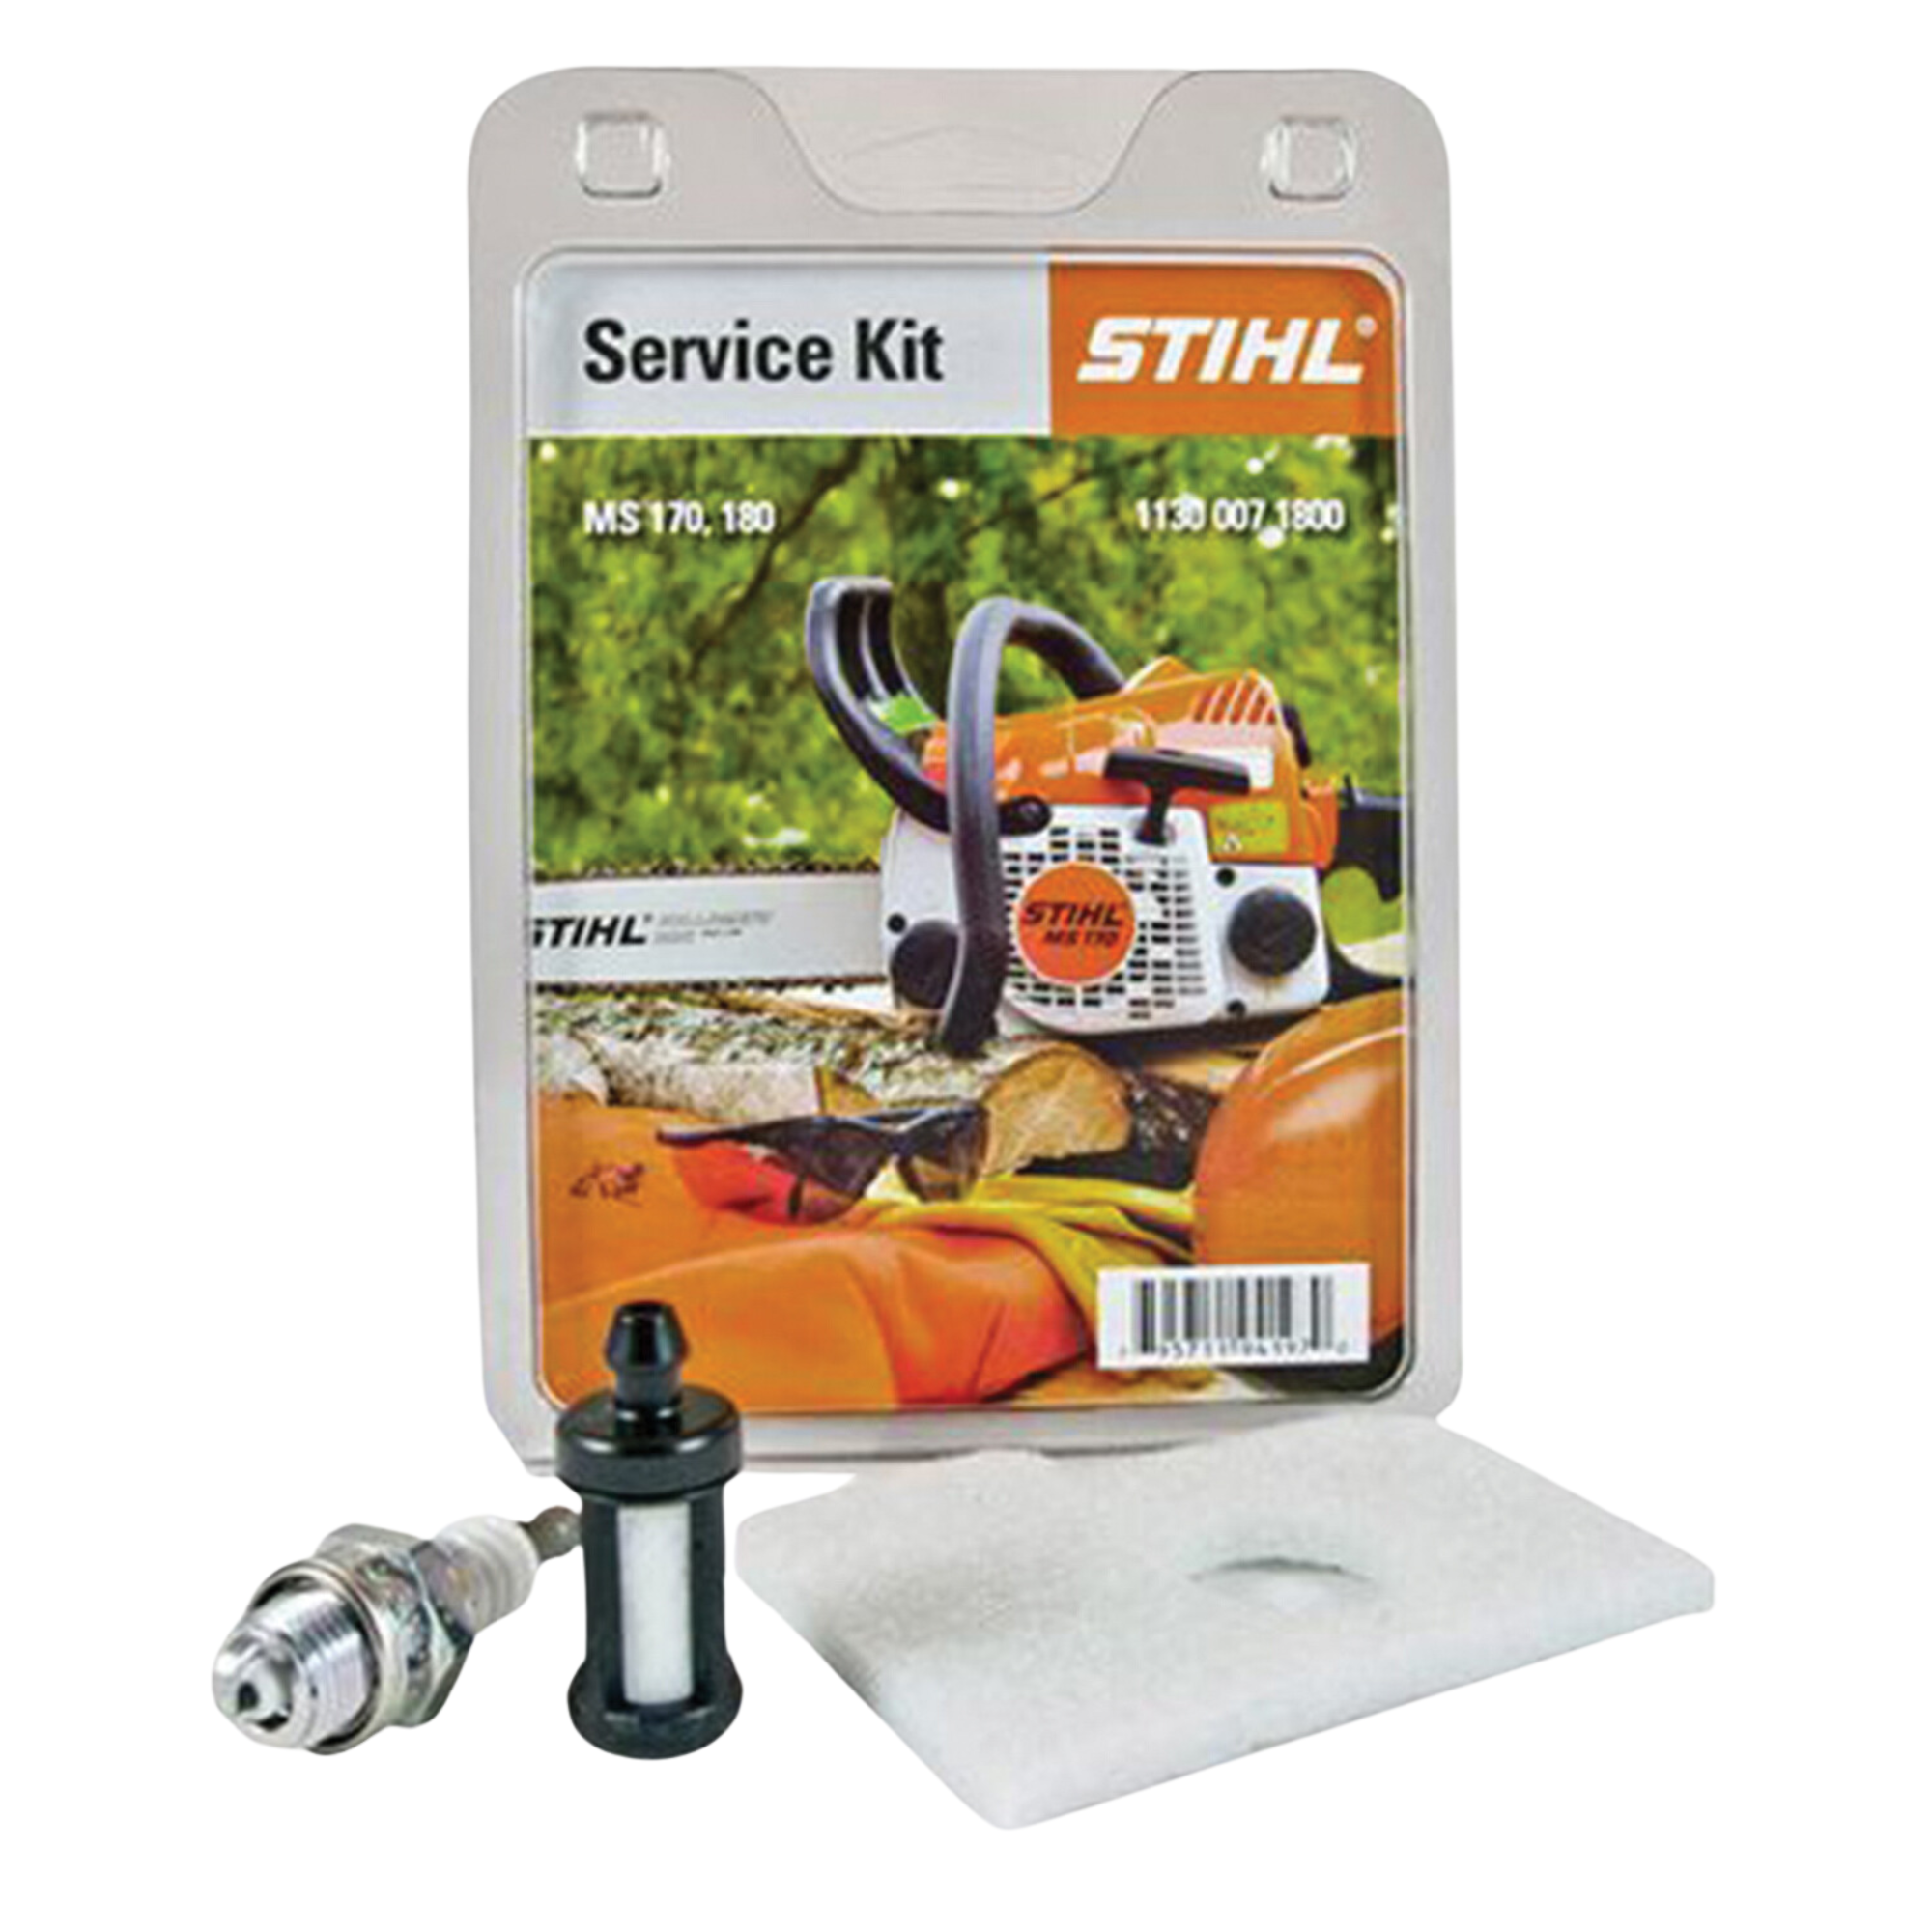 STIHL Chainsaw Service Kit 1130 Series | 1130 007 1800